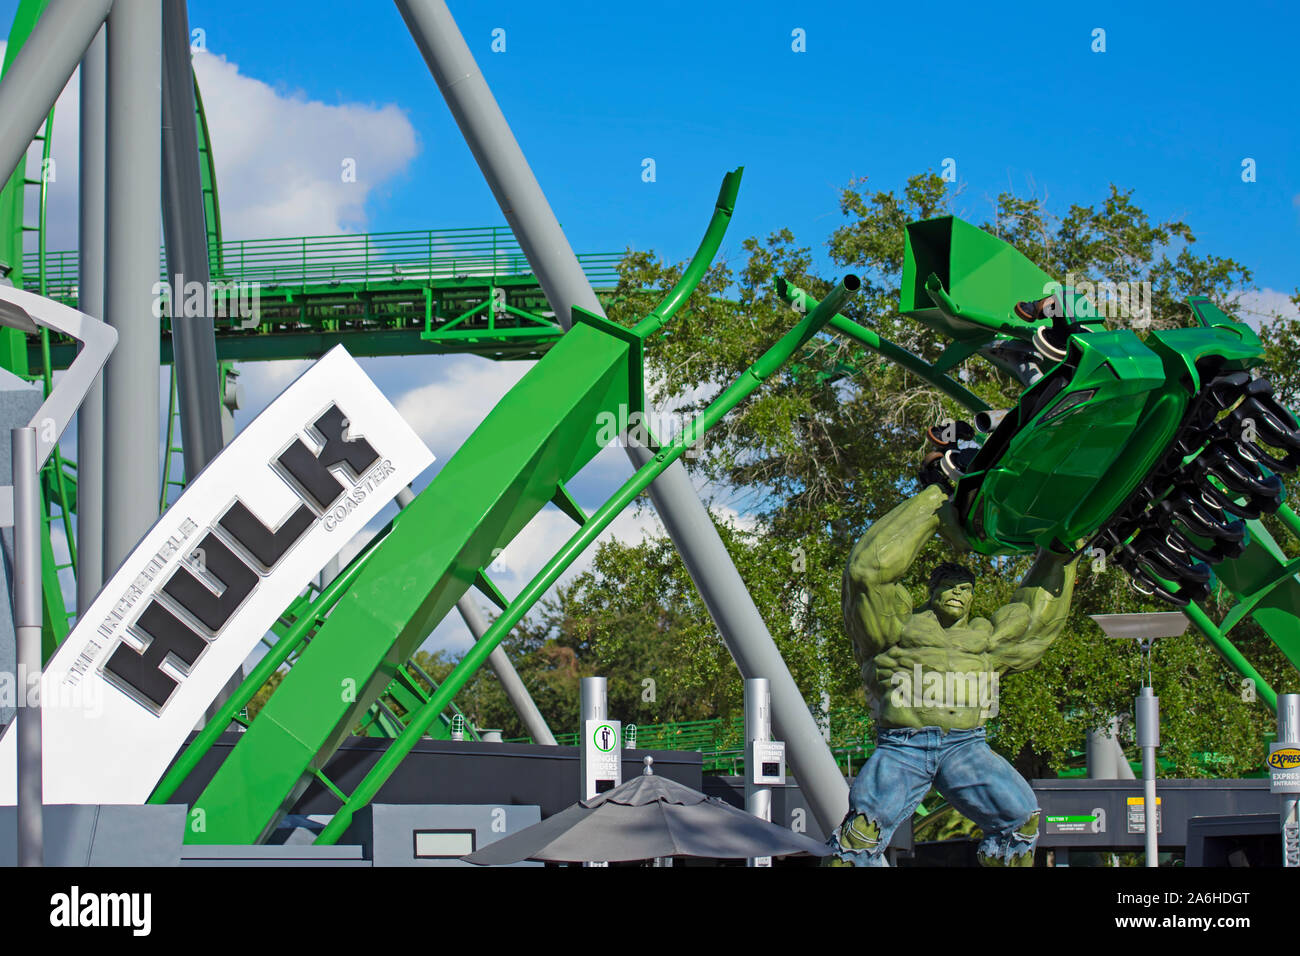 Incredible Hulk Roller Coaster Ride, Islands of Adventure, Universal Studios, Orlando, Florida, USA Stock Photo